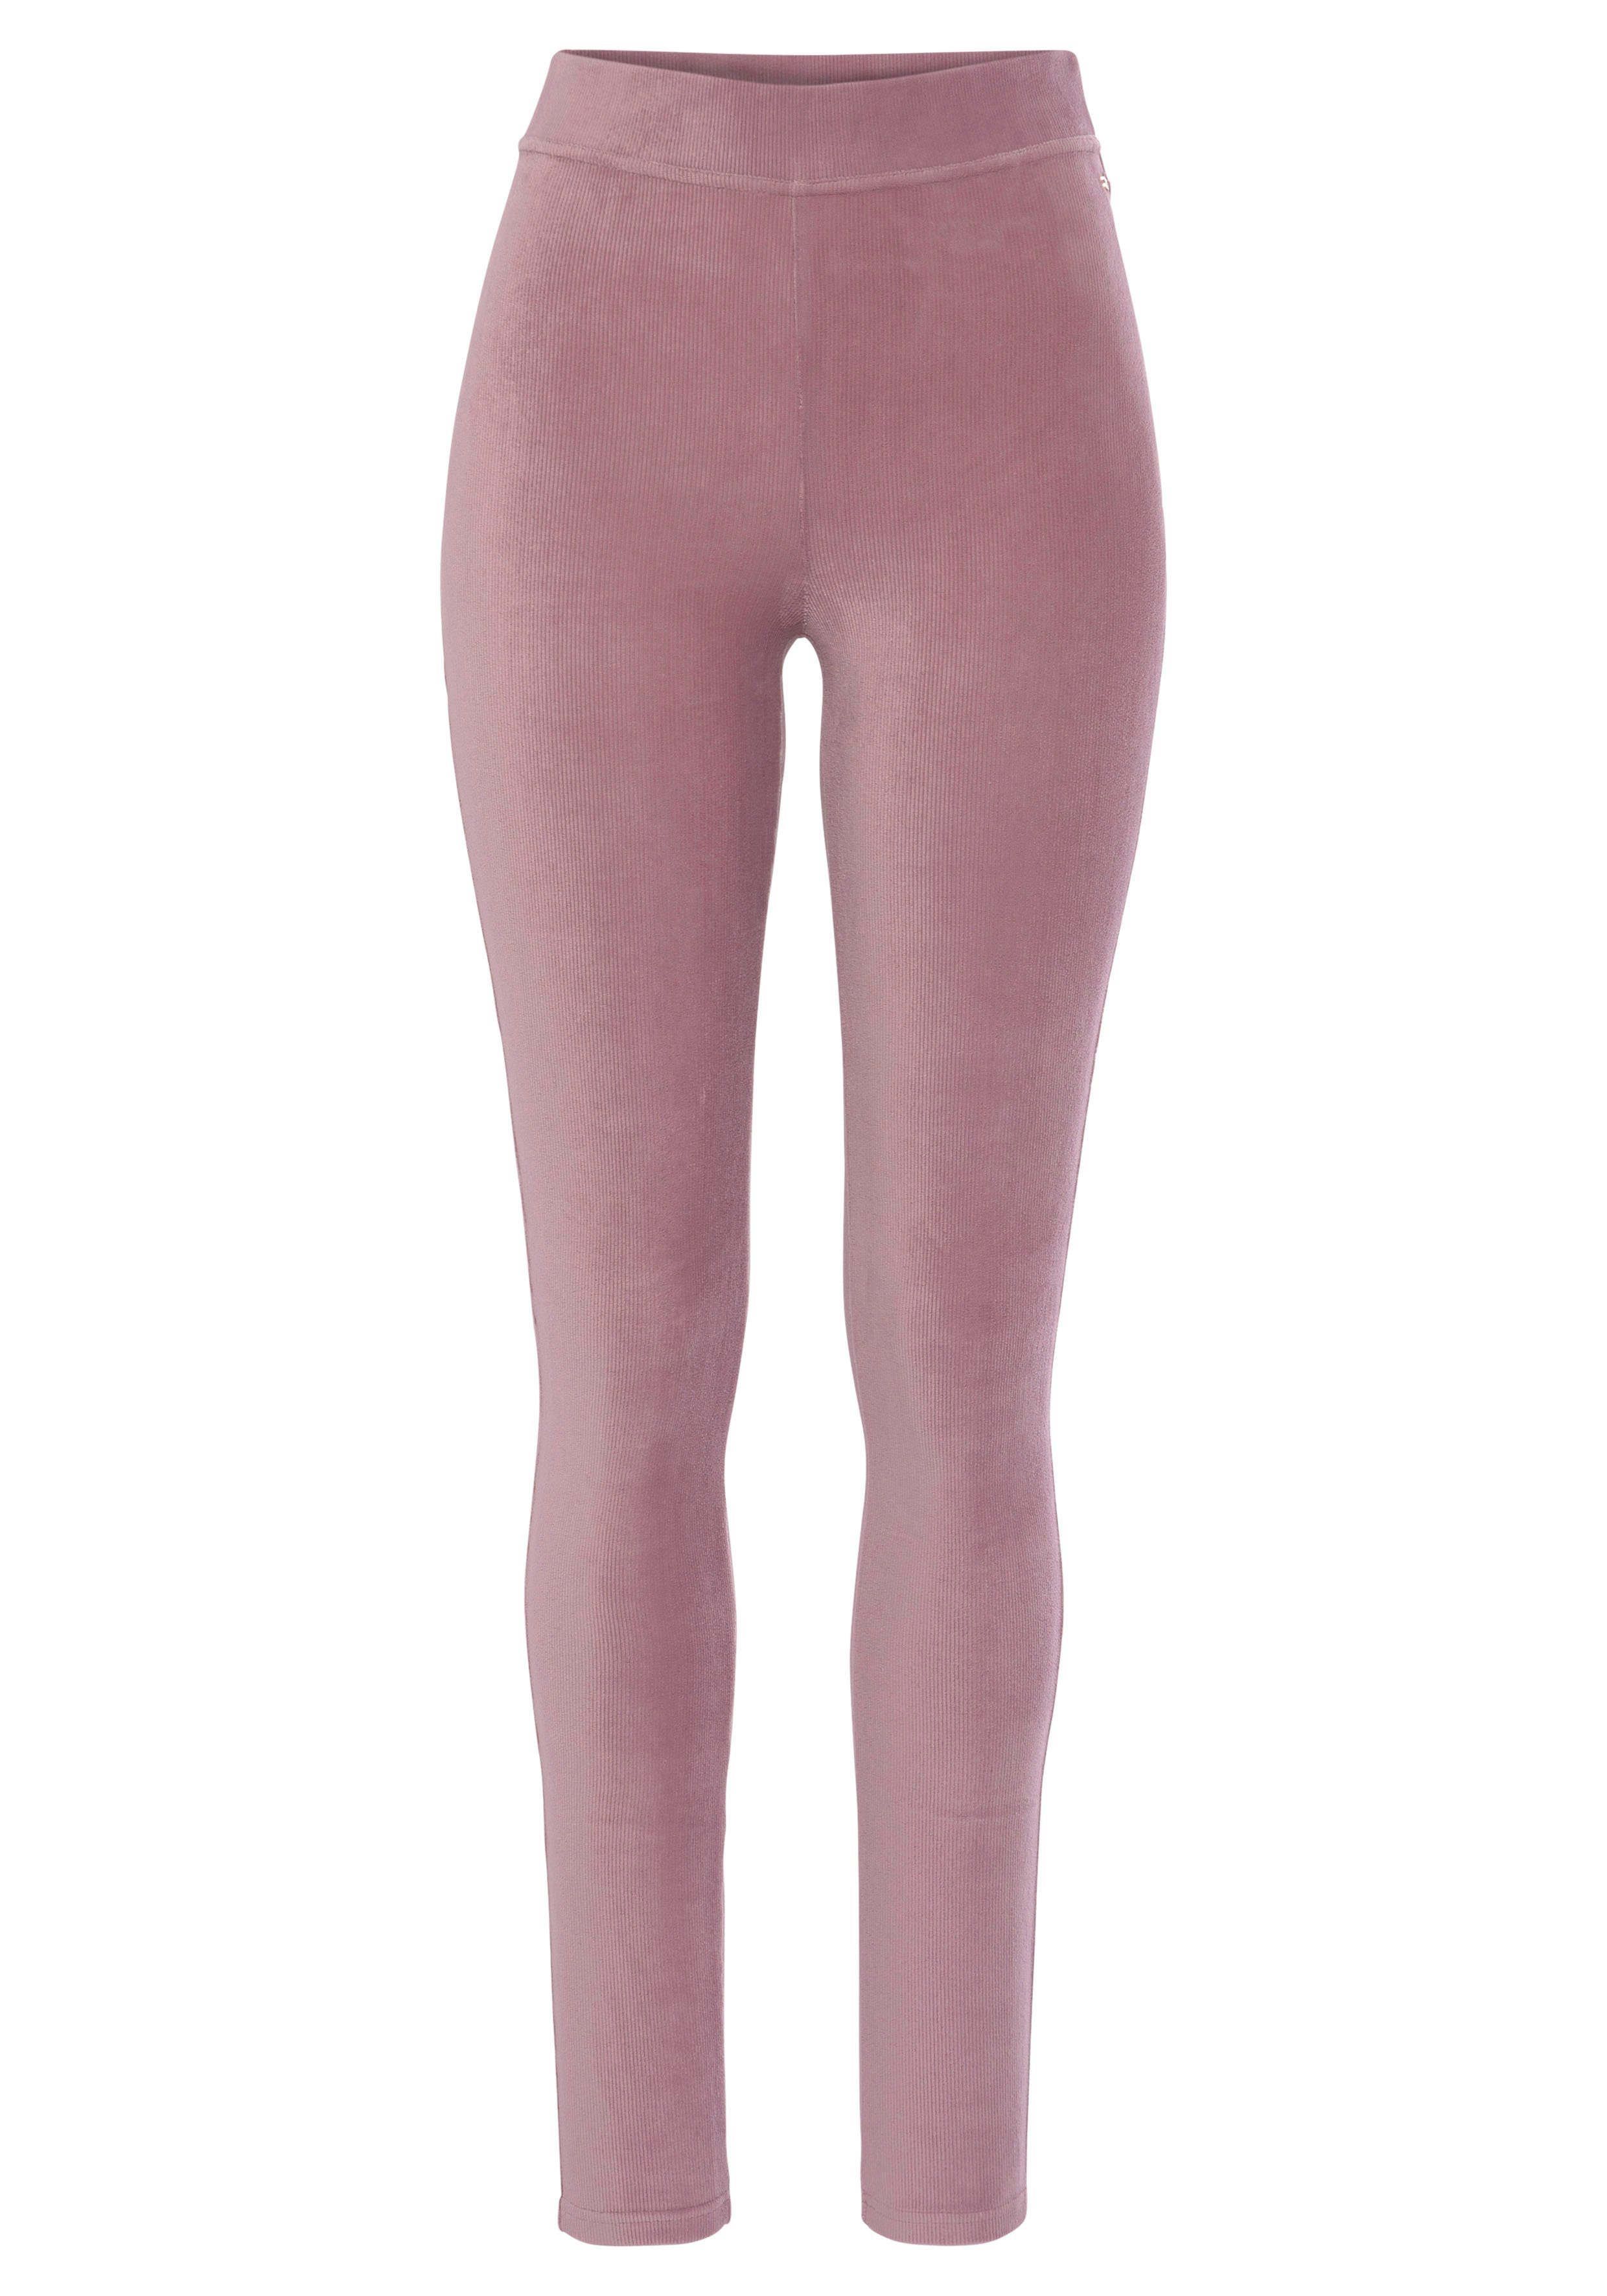 aus Loungewear weichem in Cord-Optik, Leggings rosa Material LASCANA